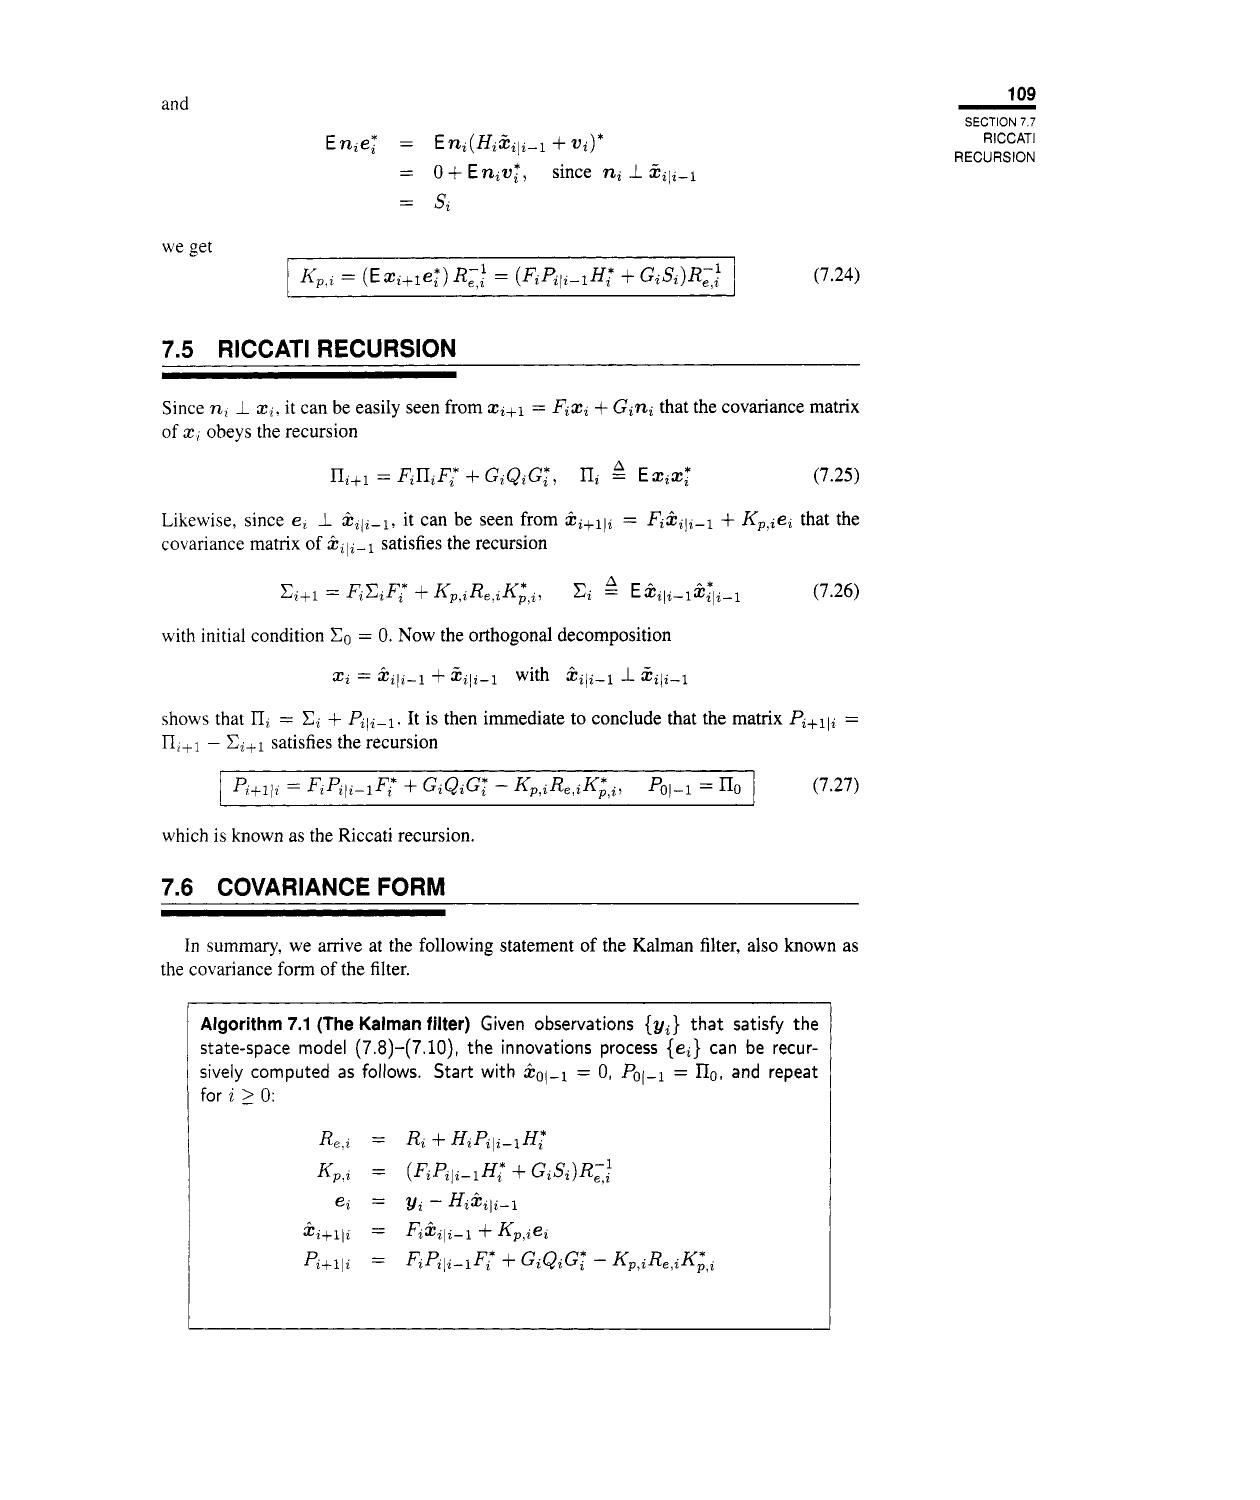 7.5 Riccati Recursion
7.6 Covariance Form